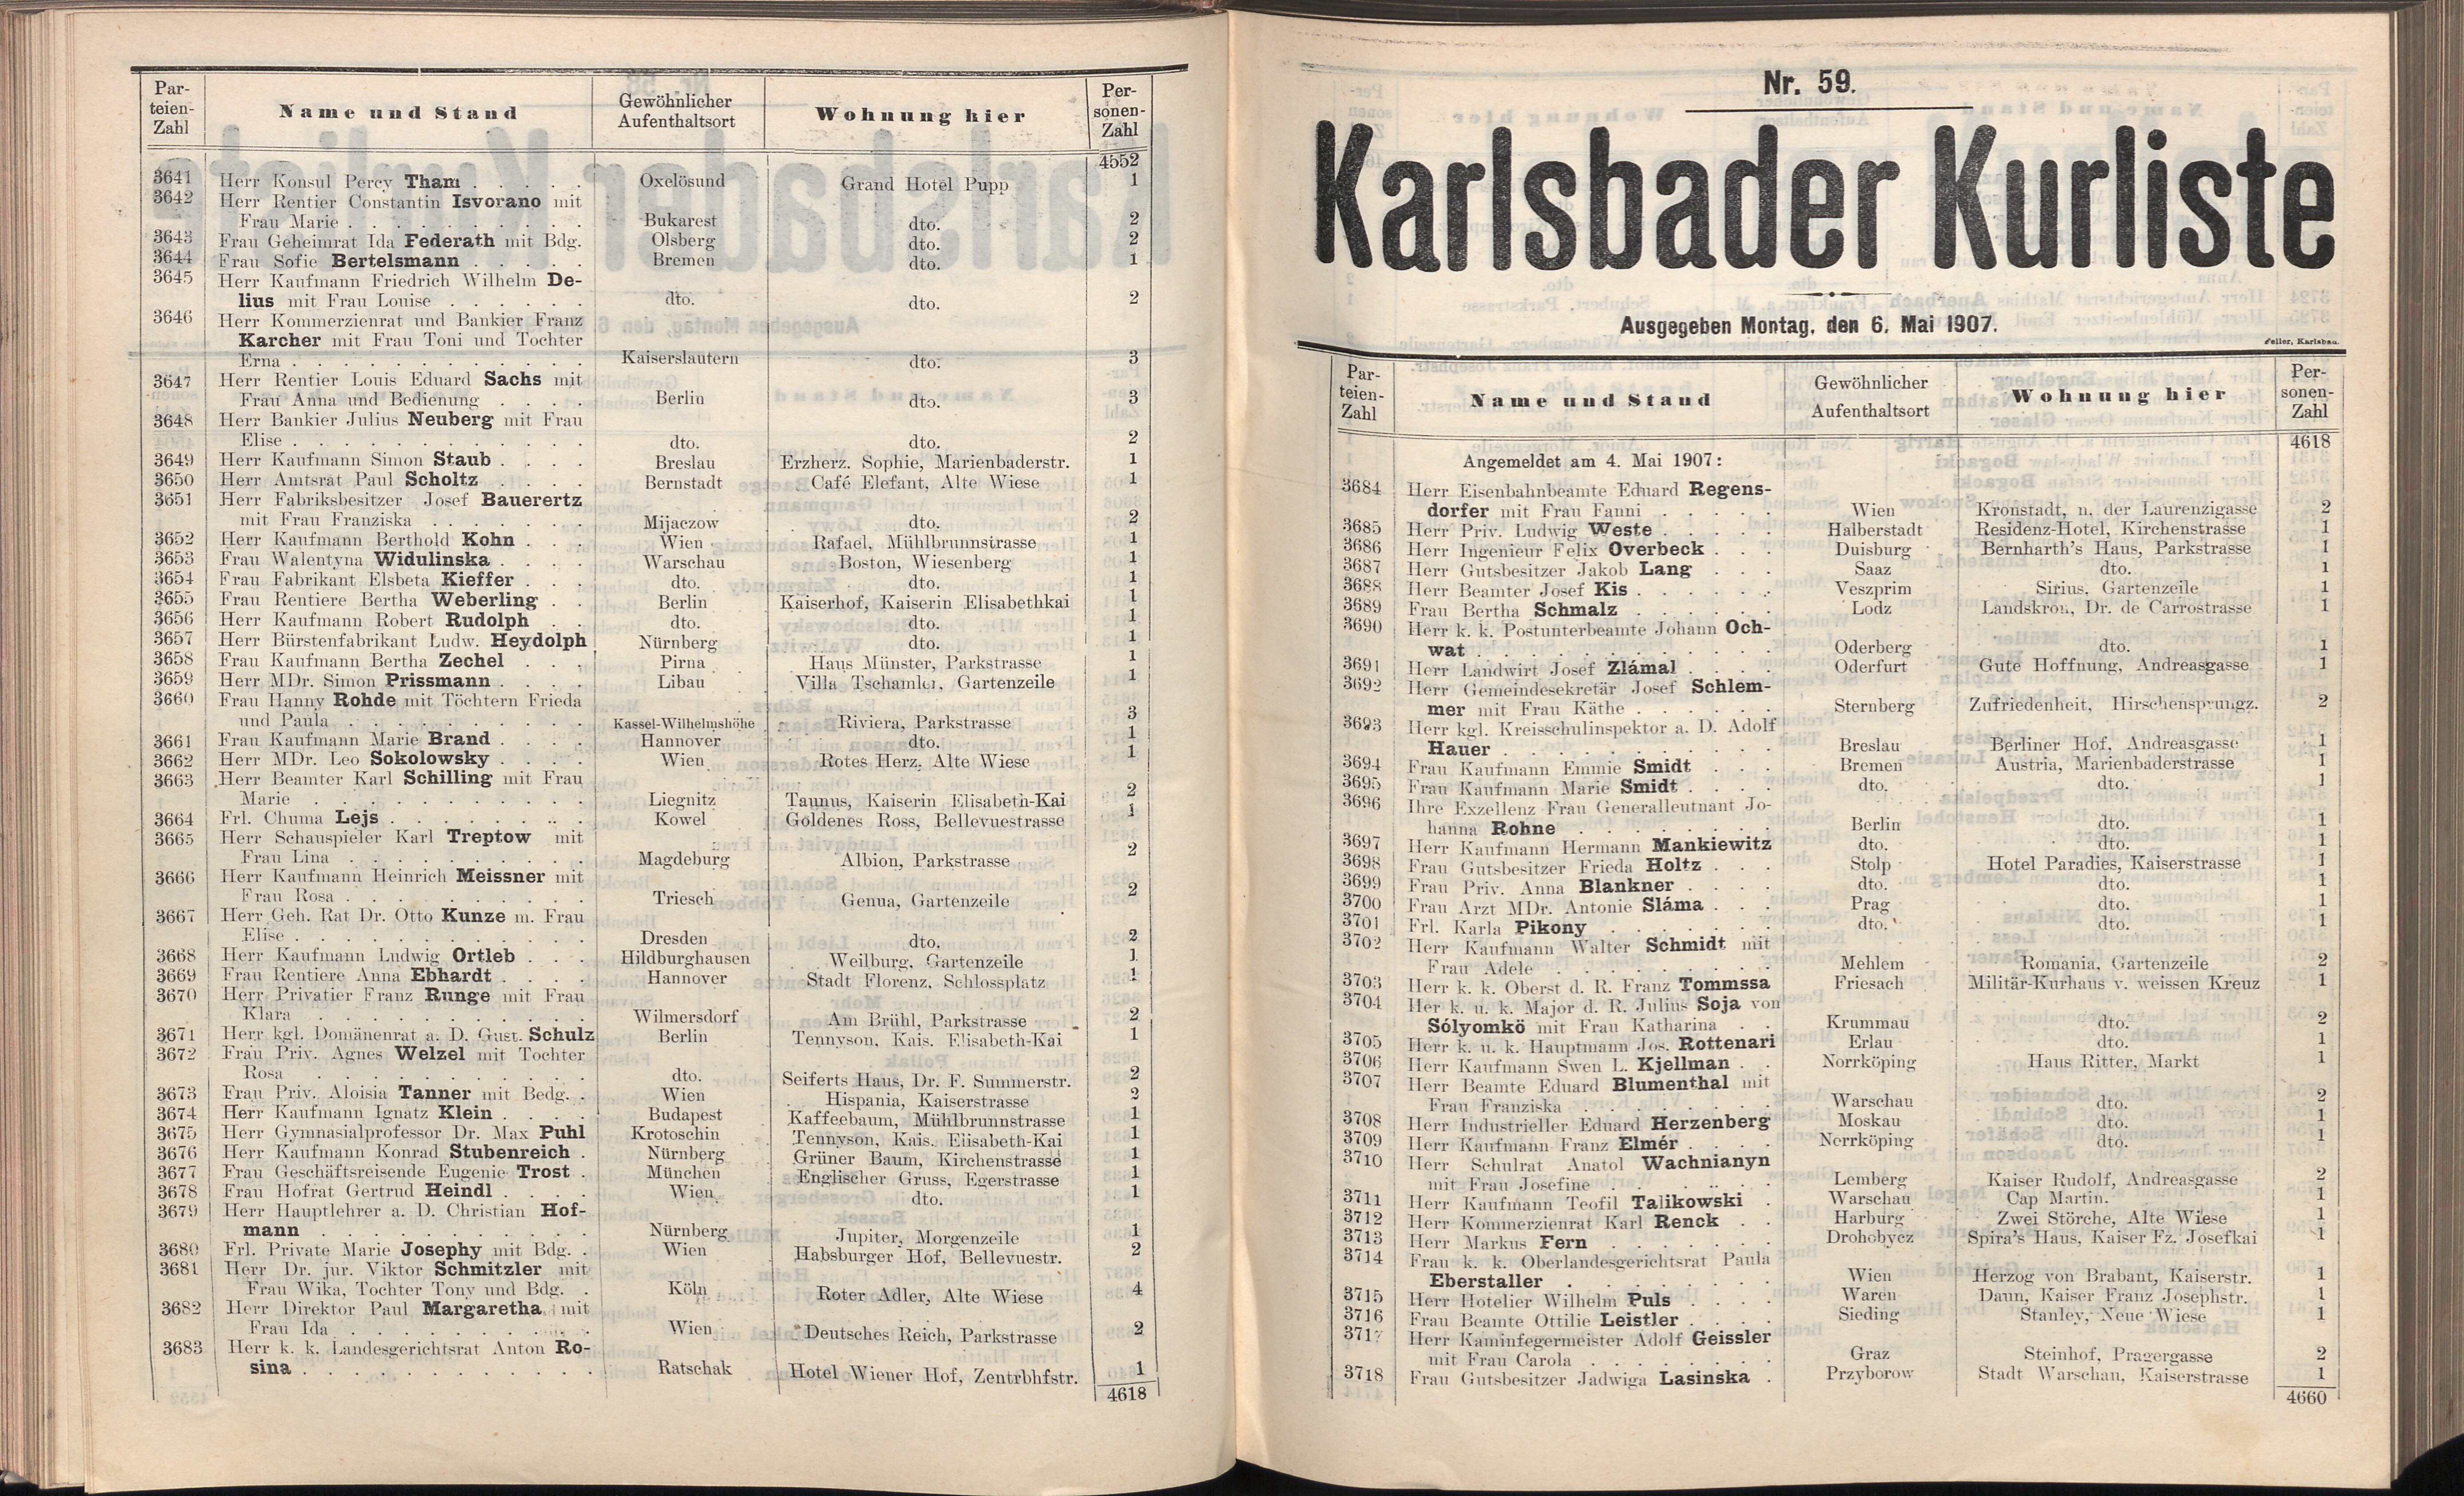 172. soap-kv_knihovna_karlsbader-kurliste-1907_1730